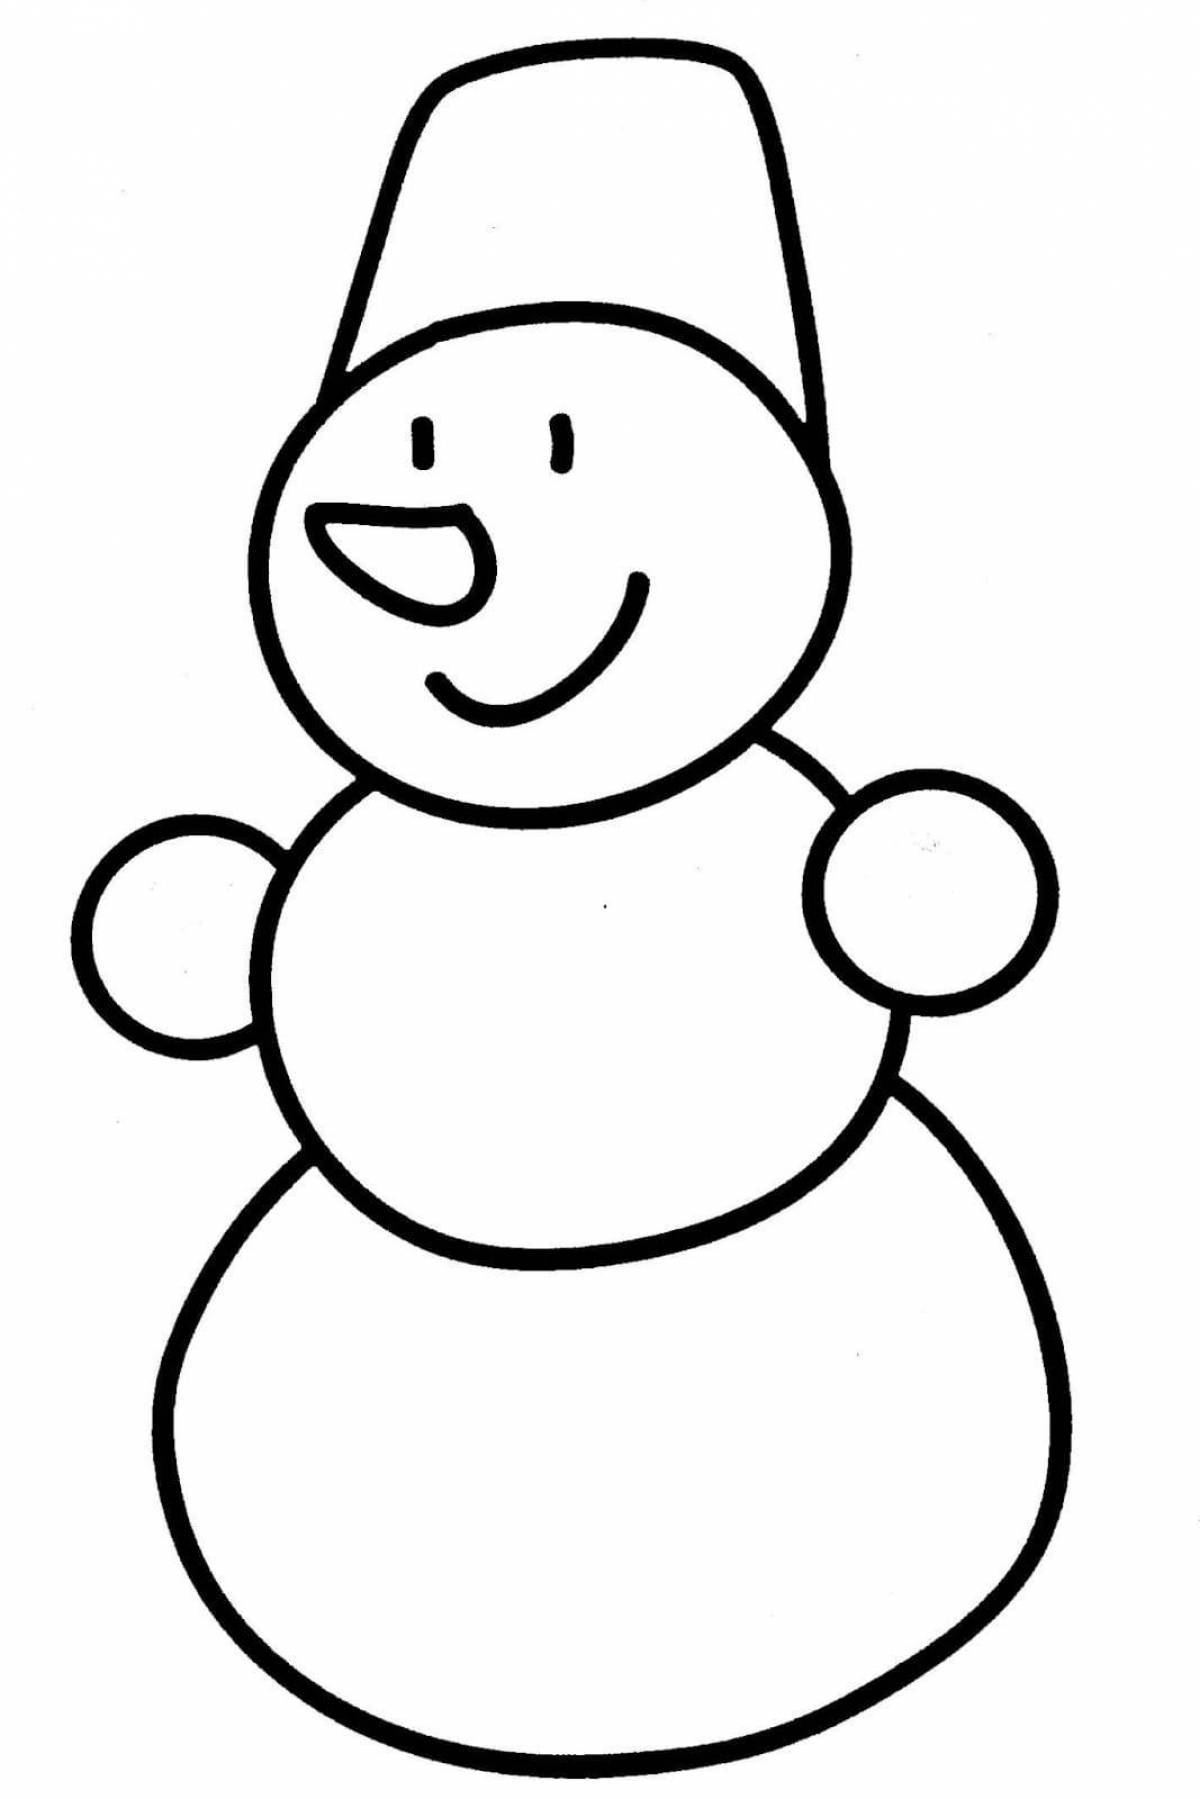 Snowman for kids #8